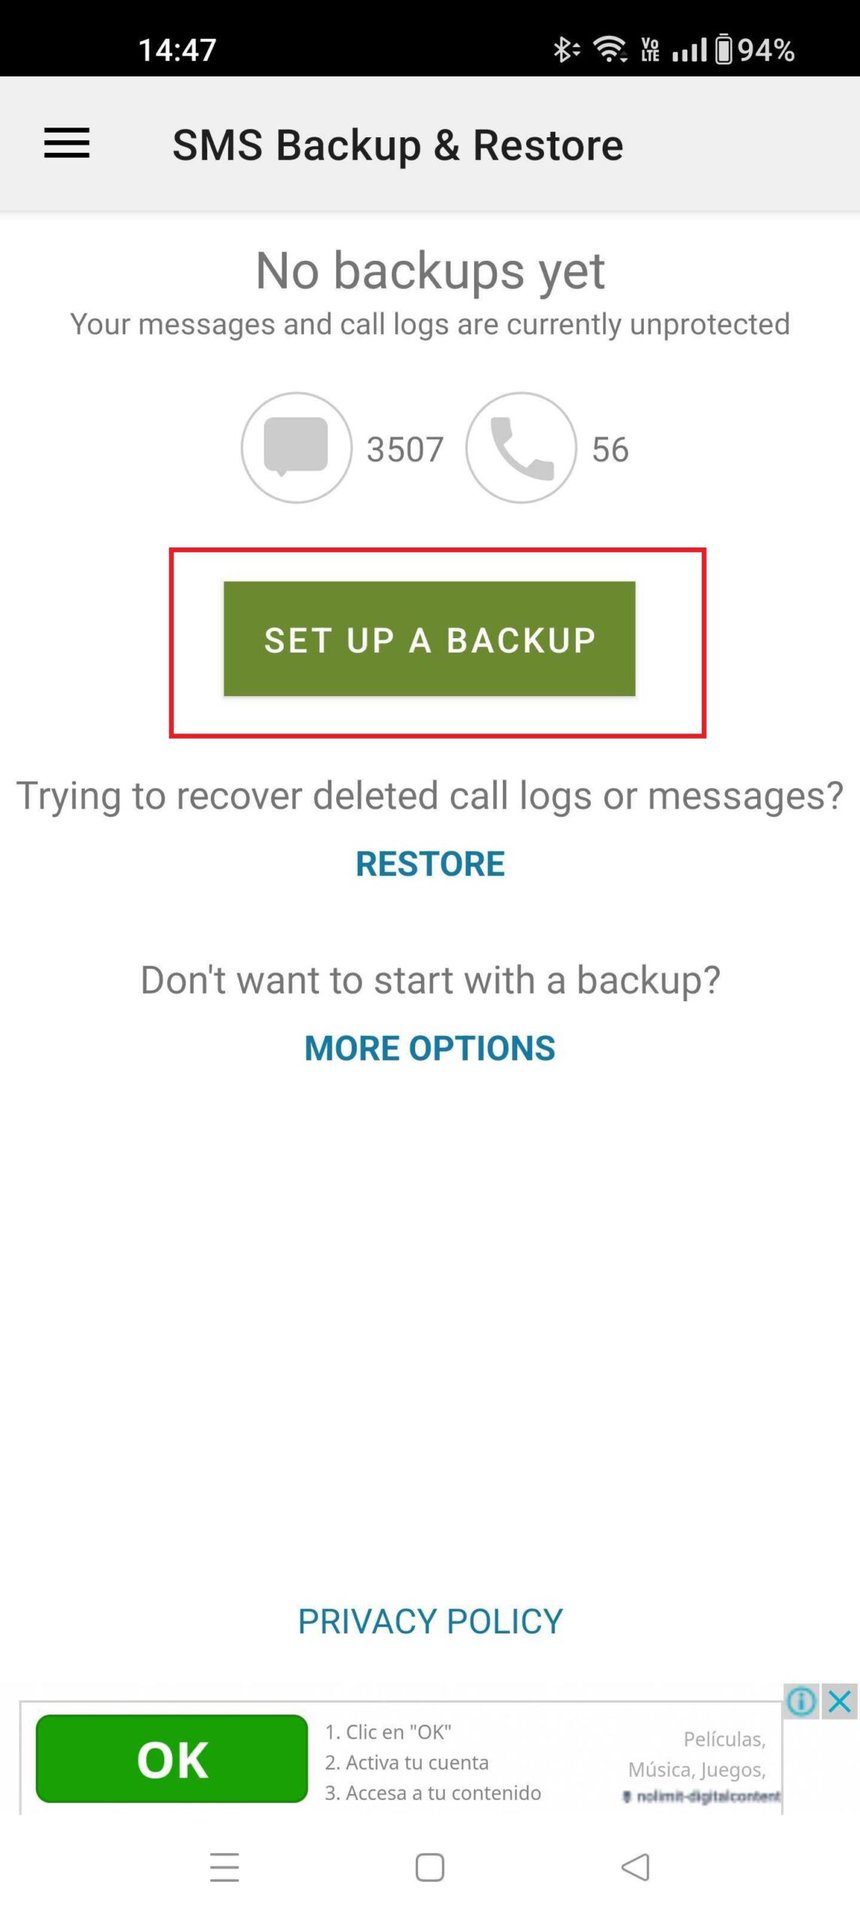 SMS Backup and Restore Setup a Backup